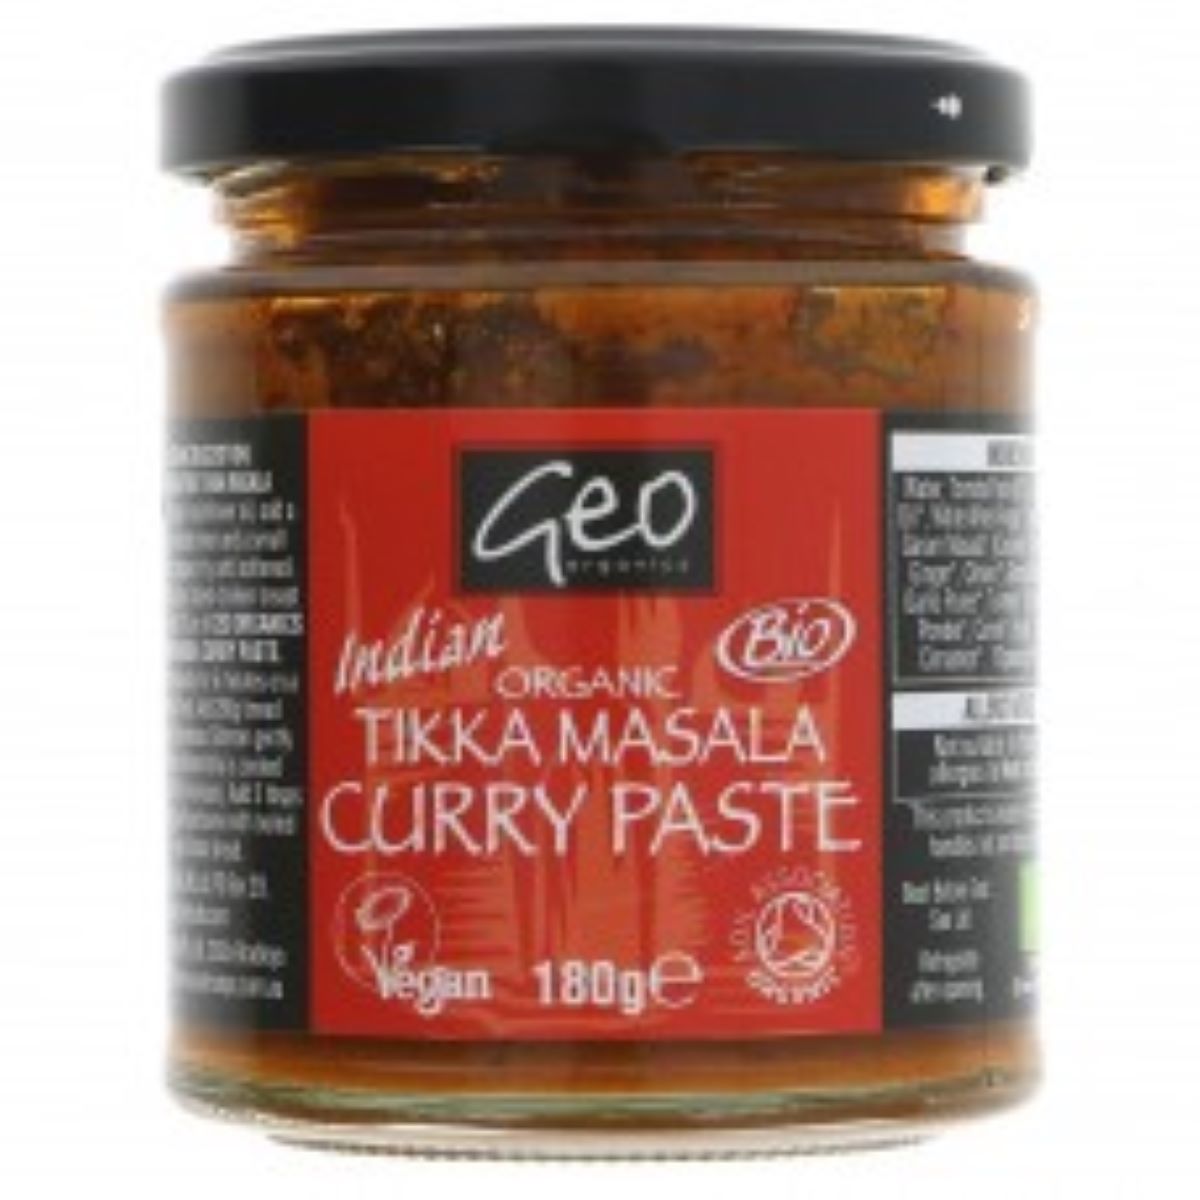 Geo Organics Tikka Masala Curry Paste - 180g